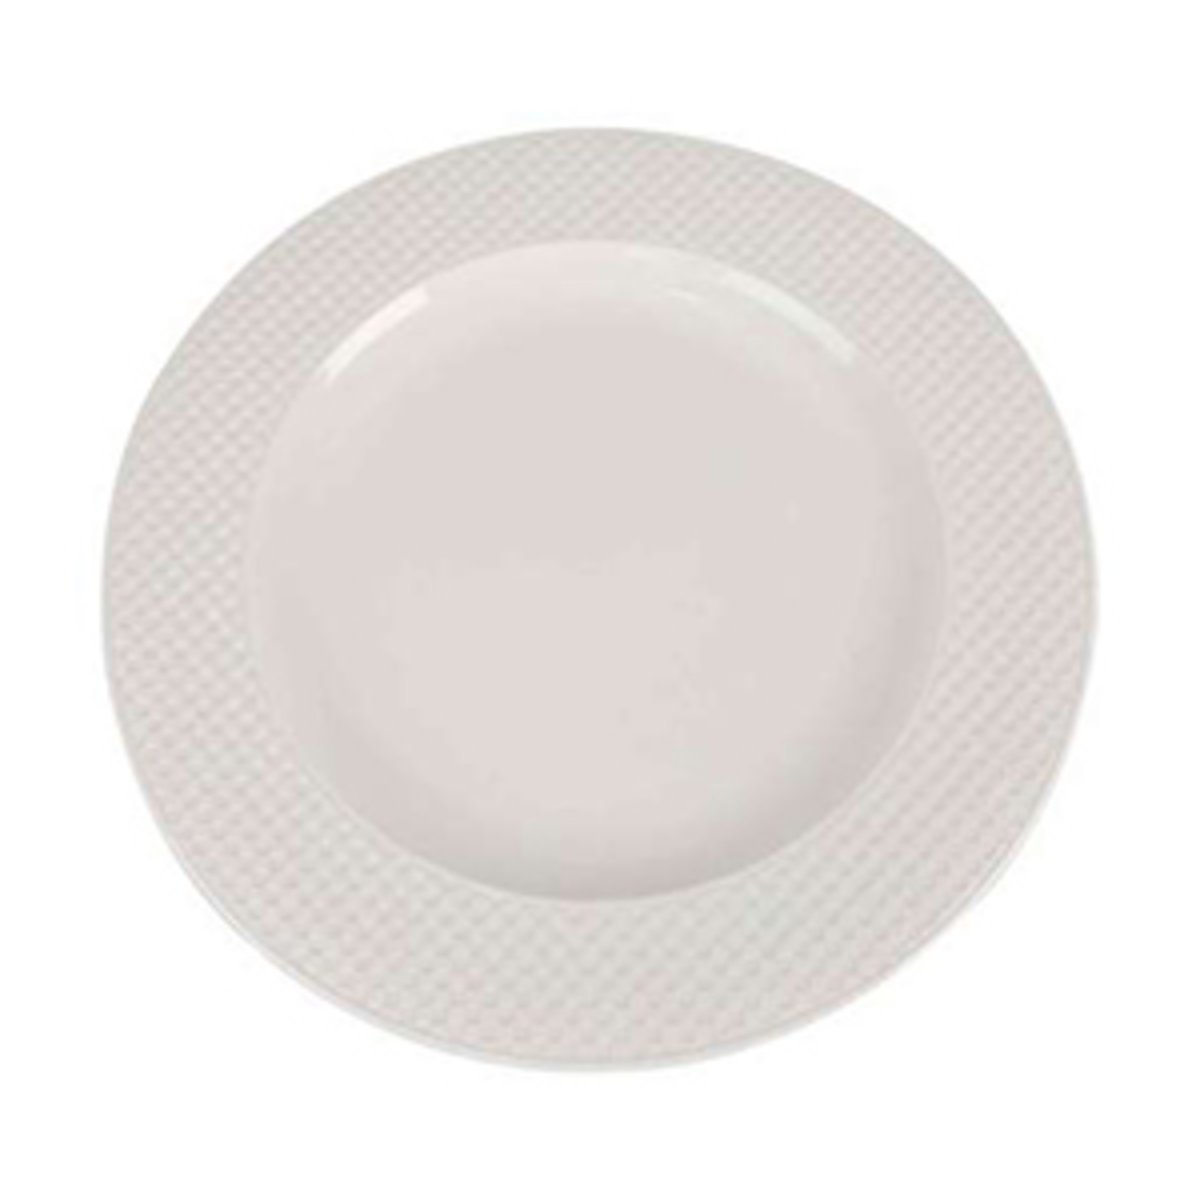 Qualitier Dinner Plate White 27.5cm per pc